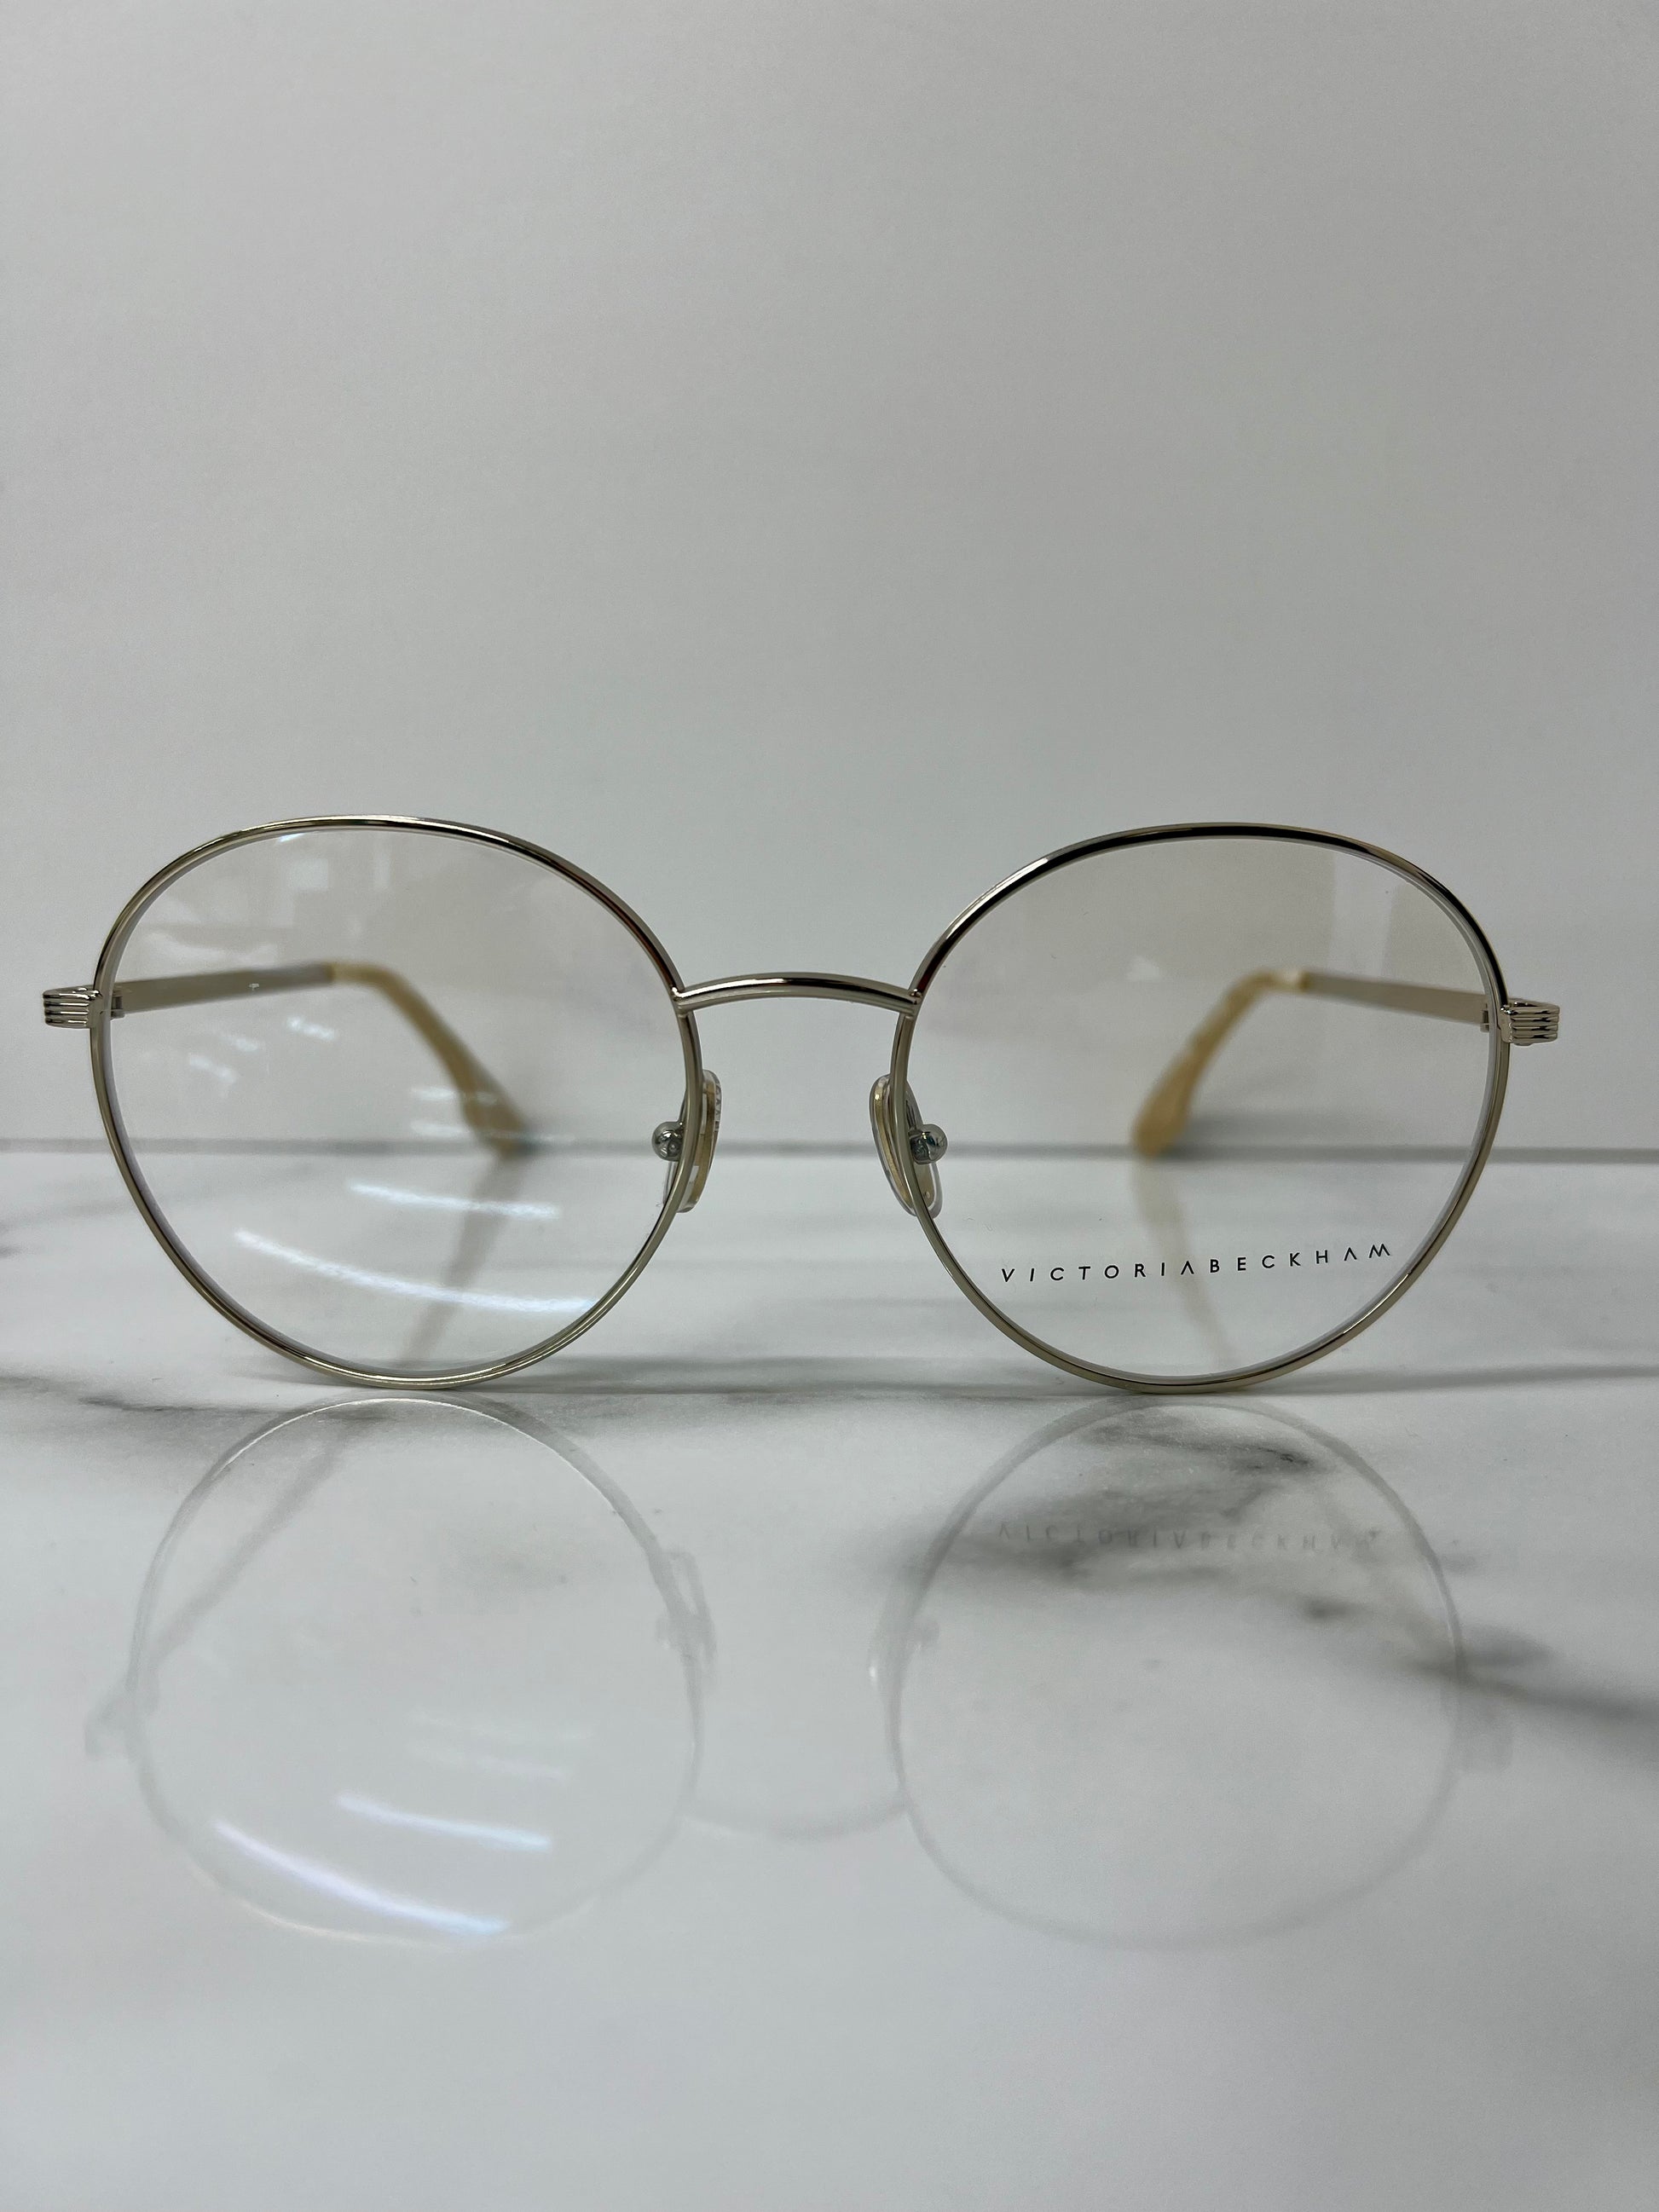 Victoria Beckham Glasses Frames Optical Silver Pearl Eyeglasses VB229